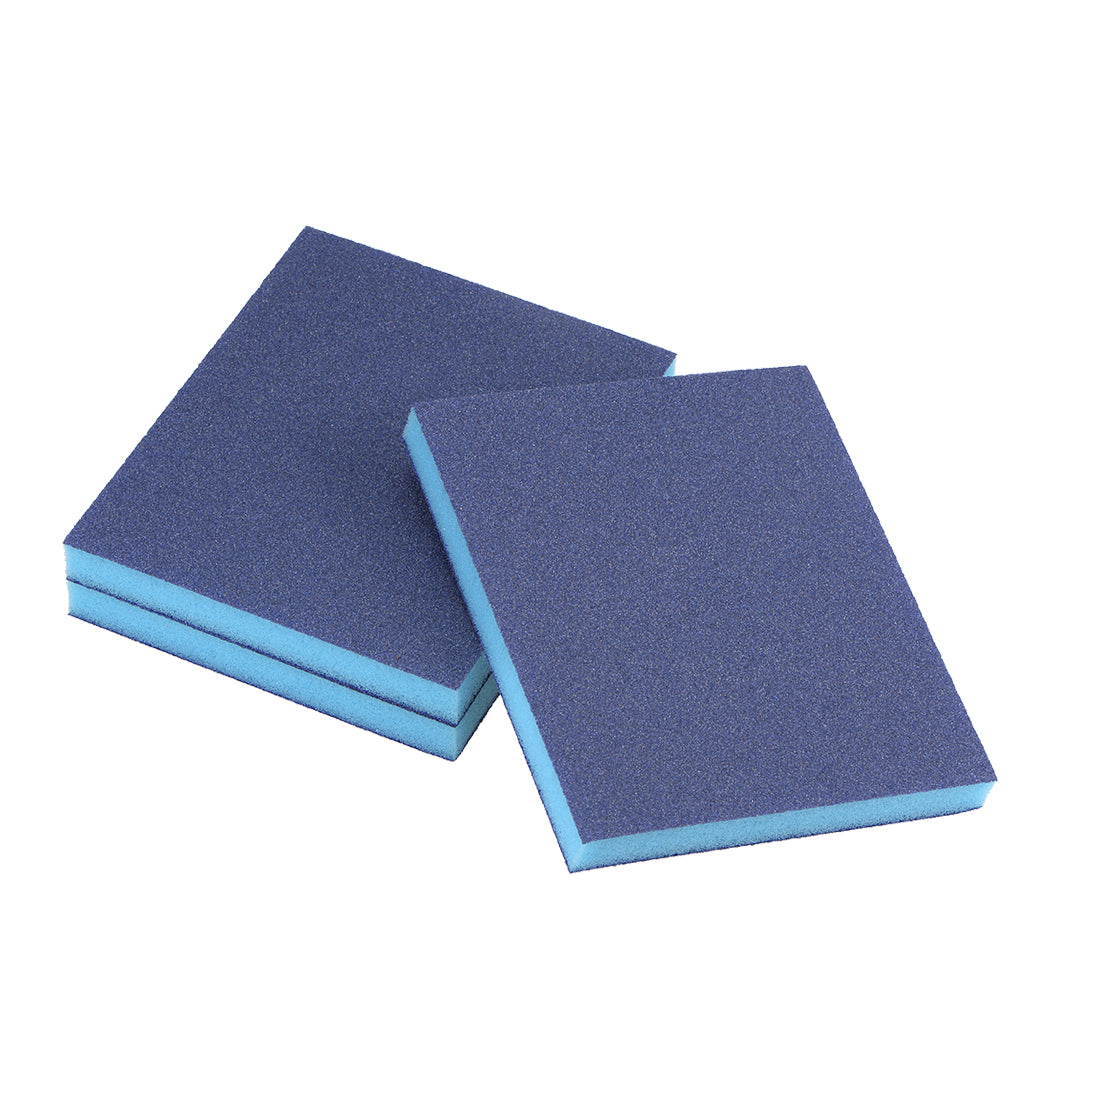 uxcell Uxcell Sanding Sponge 120 Grit Sanding Block Pad 4.7inch x 3.9inch x 0.4inch Blue 3pcs